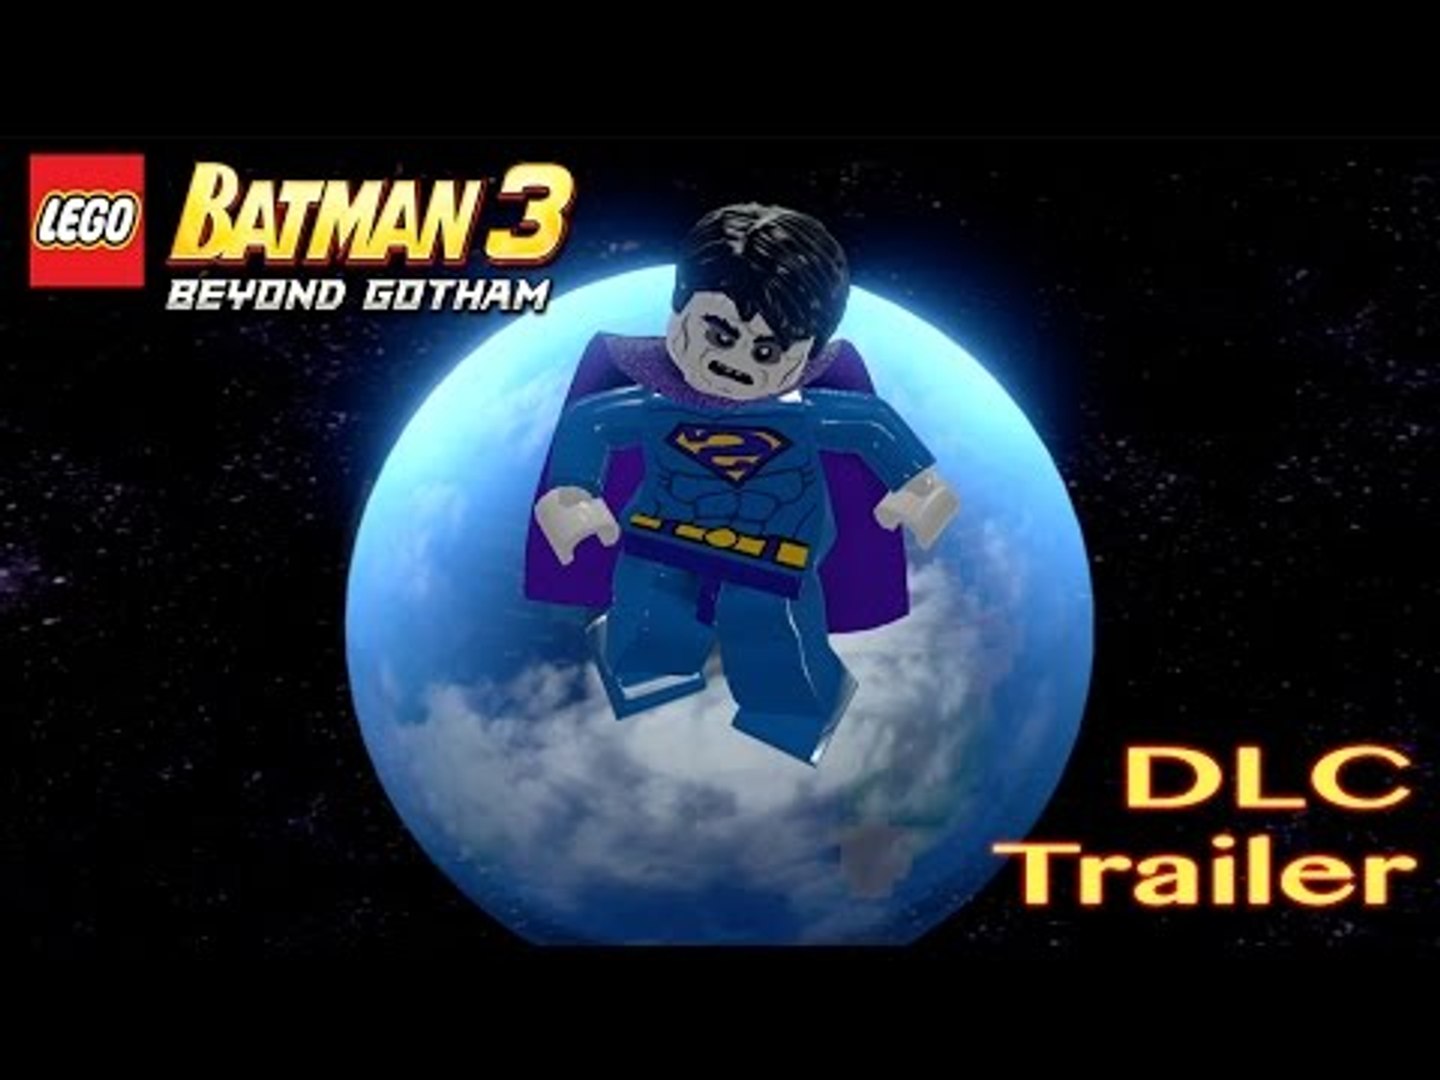 LEGO Batman 3 Season Pass Trailer 